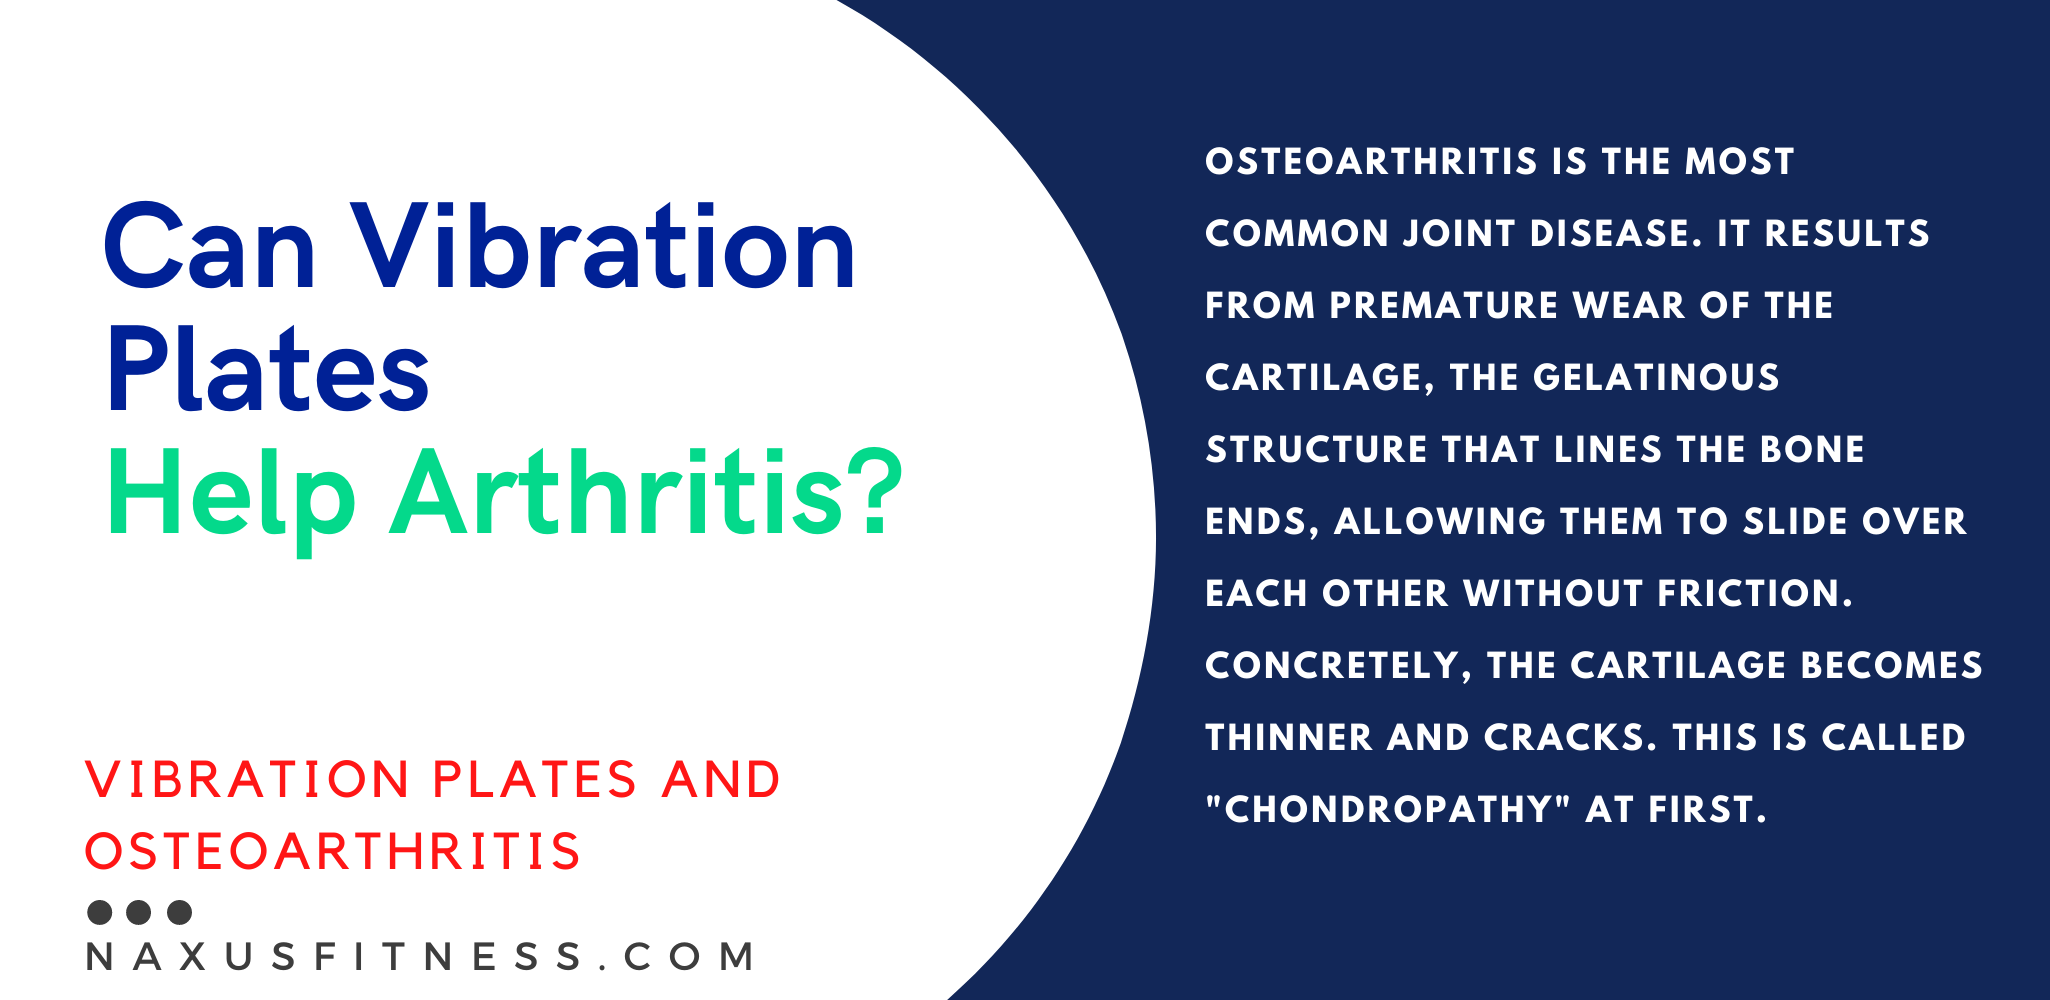 Can Vibration Plates Help Arthritis - Osteoarthritis